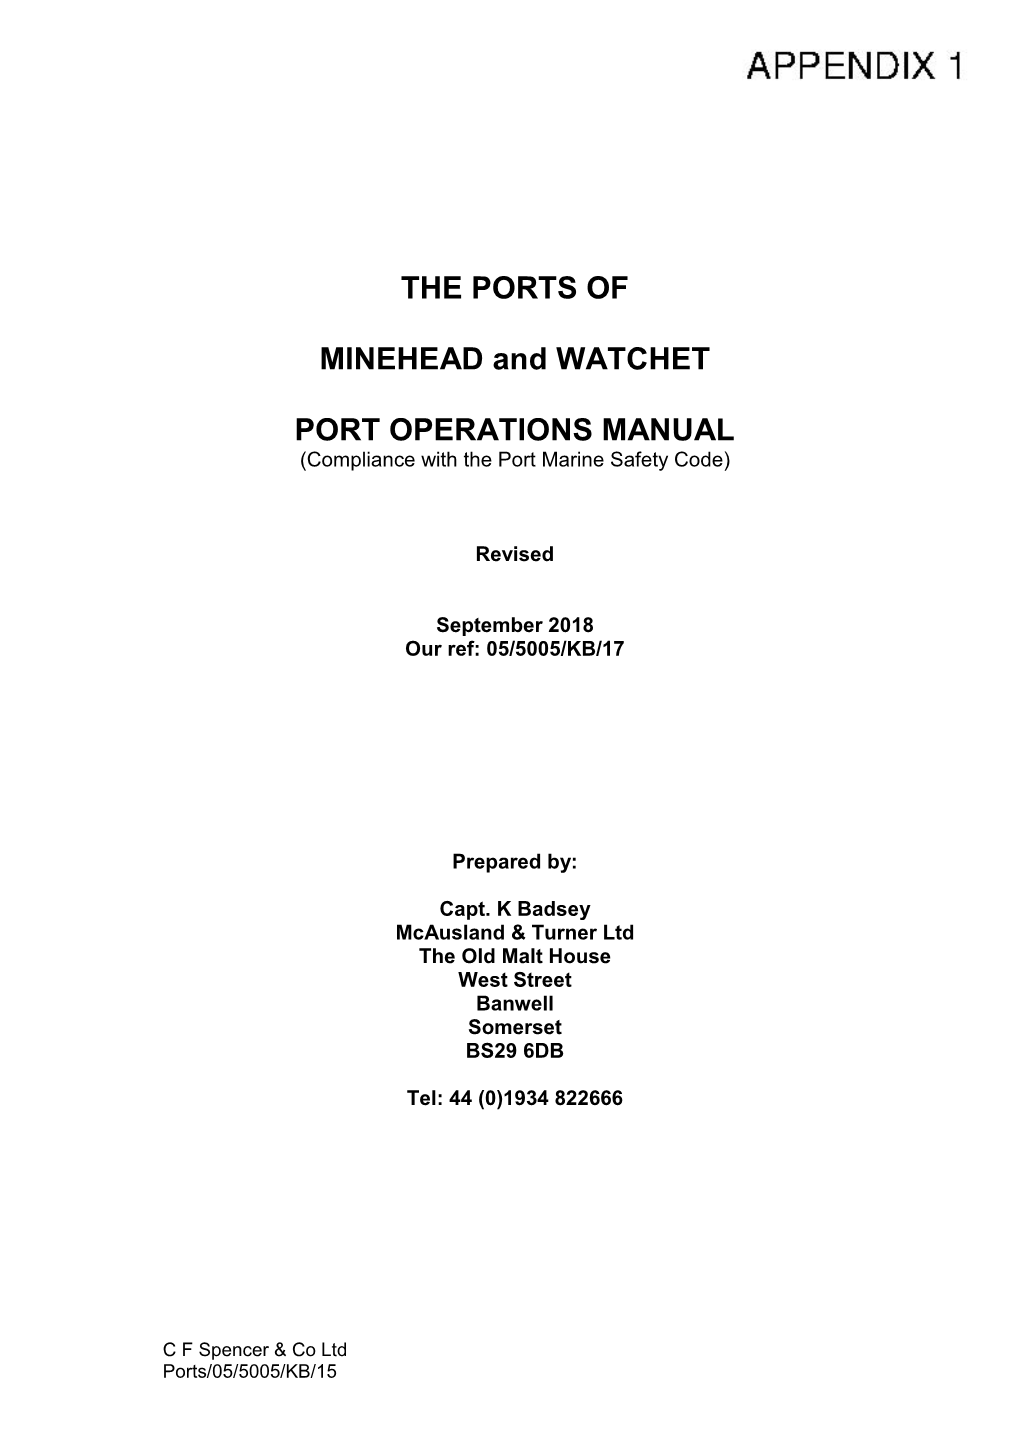 20181023 Watchet and Minehead Port Operations Manual